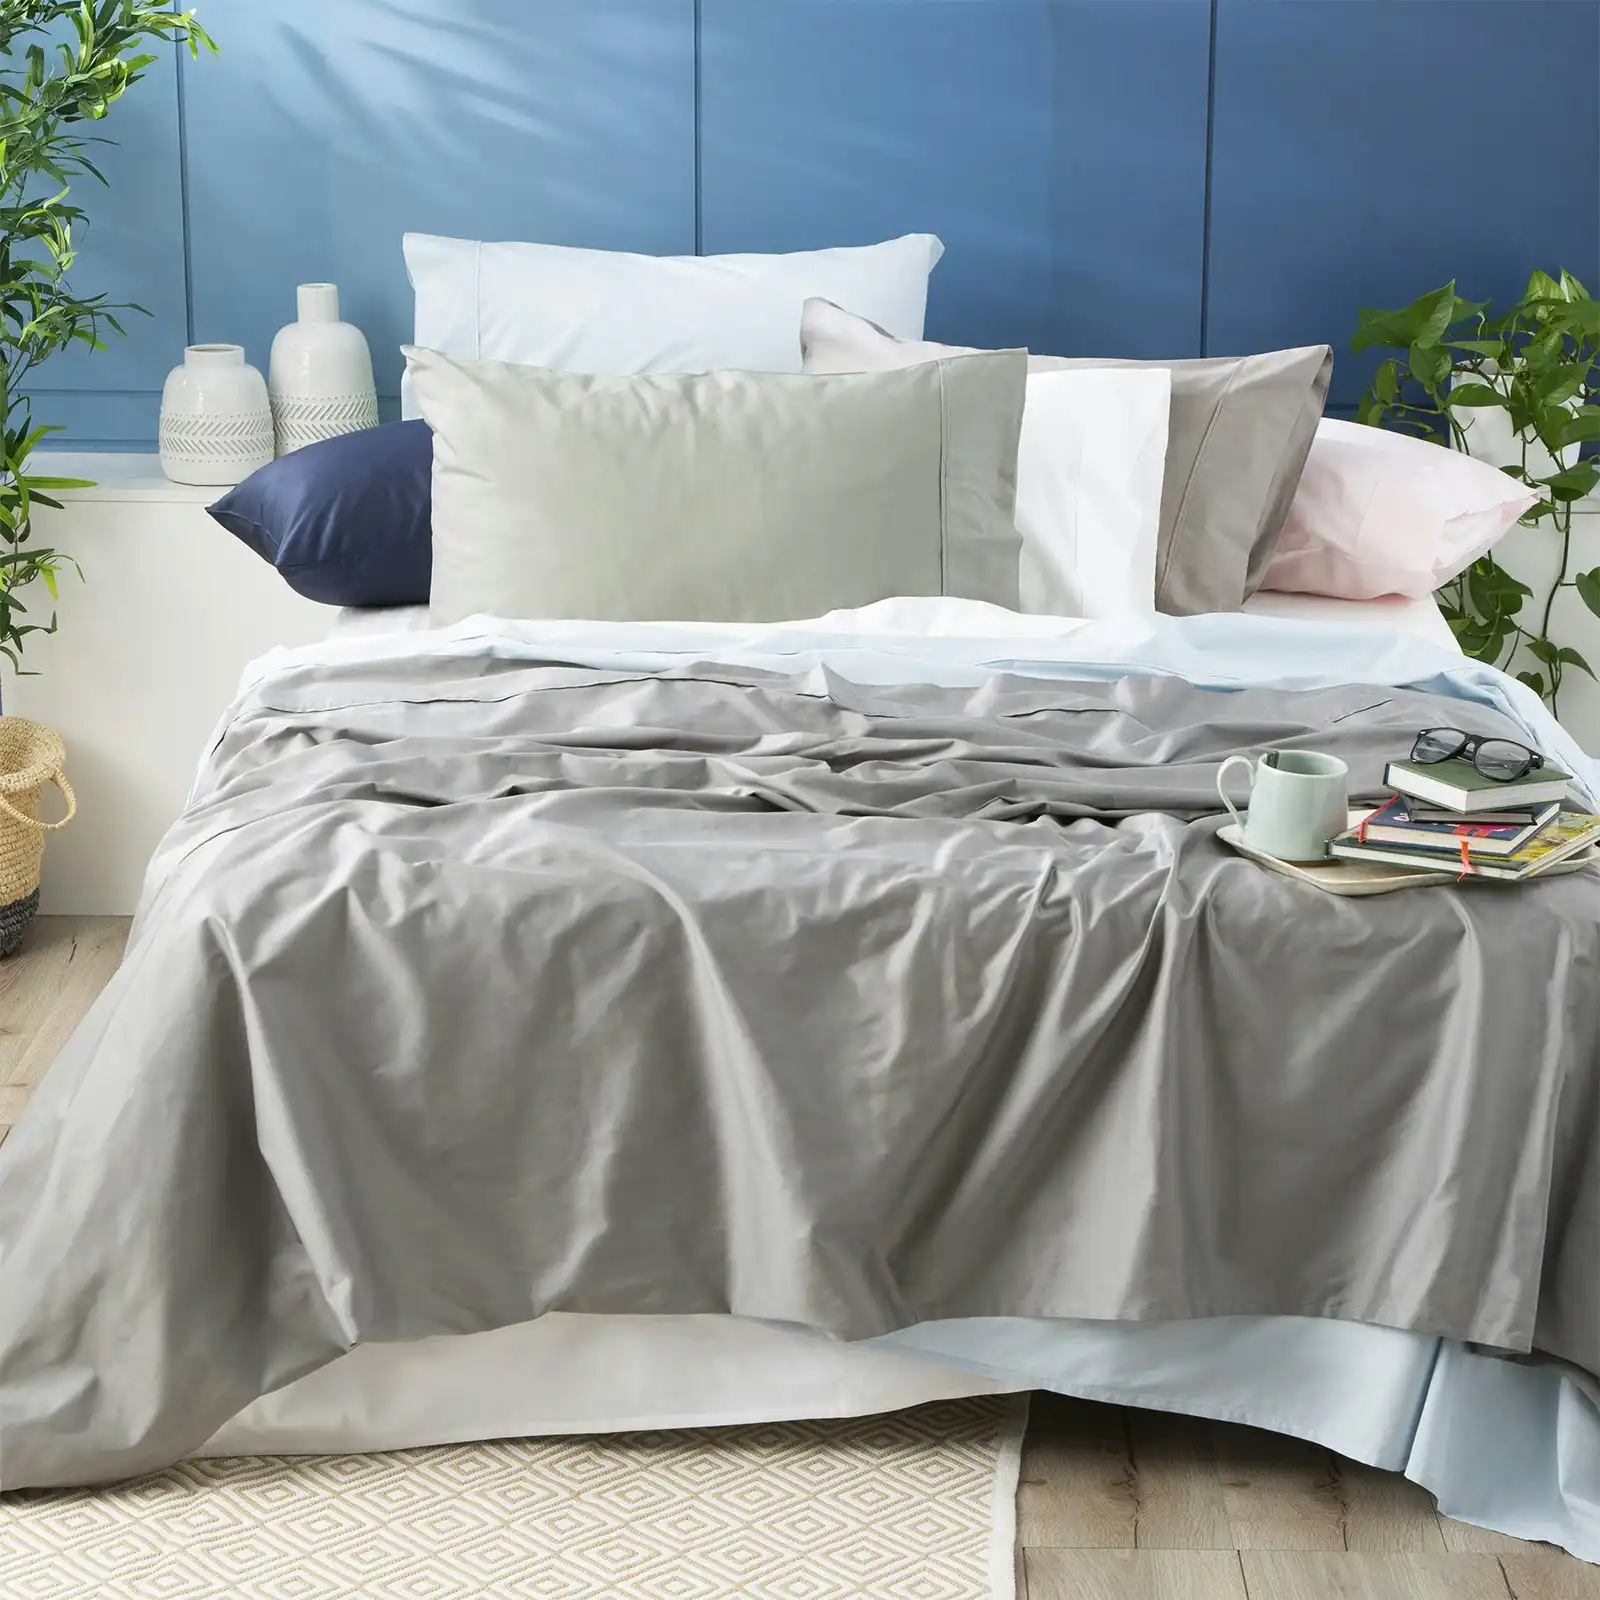 Park Avenue Queen Bed Sheet/Pillowcases Set 500TC Bamboo Cotton Bedding Pewter